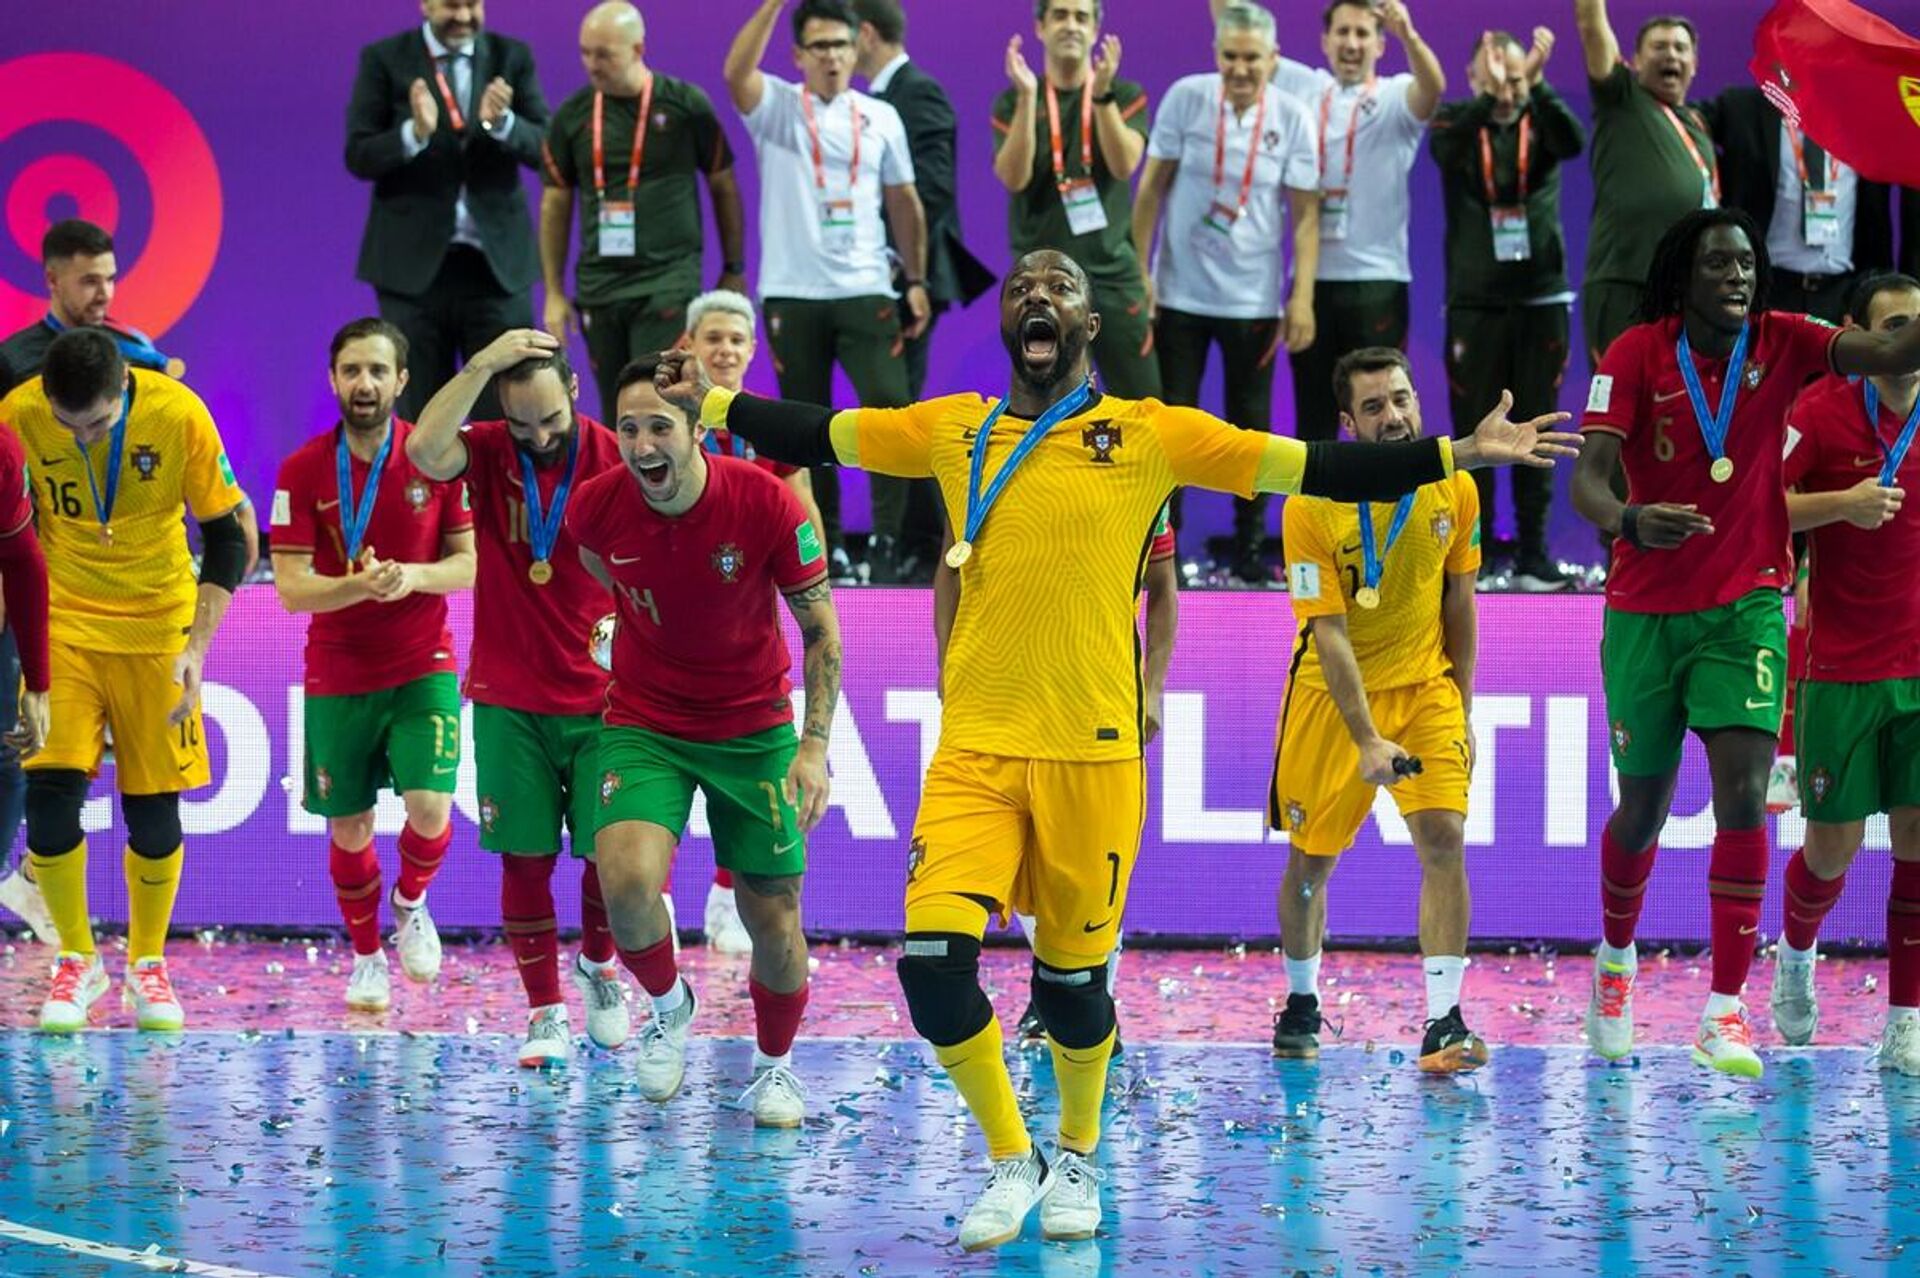 Игроки сборной Португалии празднуют победу на Чемпионате мира по футзалу в Литве - Sputnik Литва, 1920, 04.10.2021